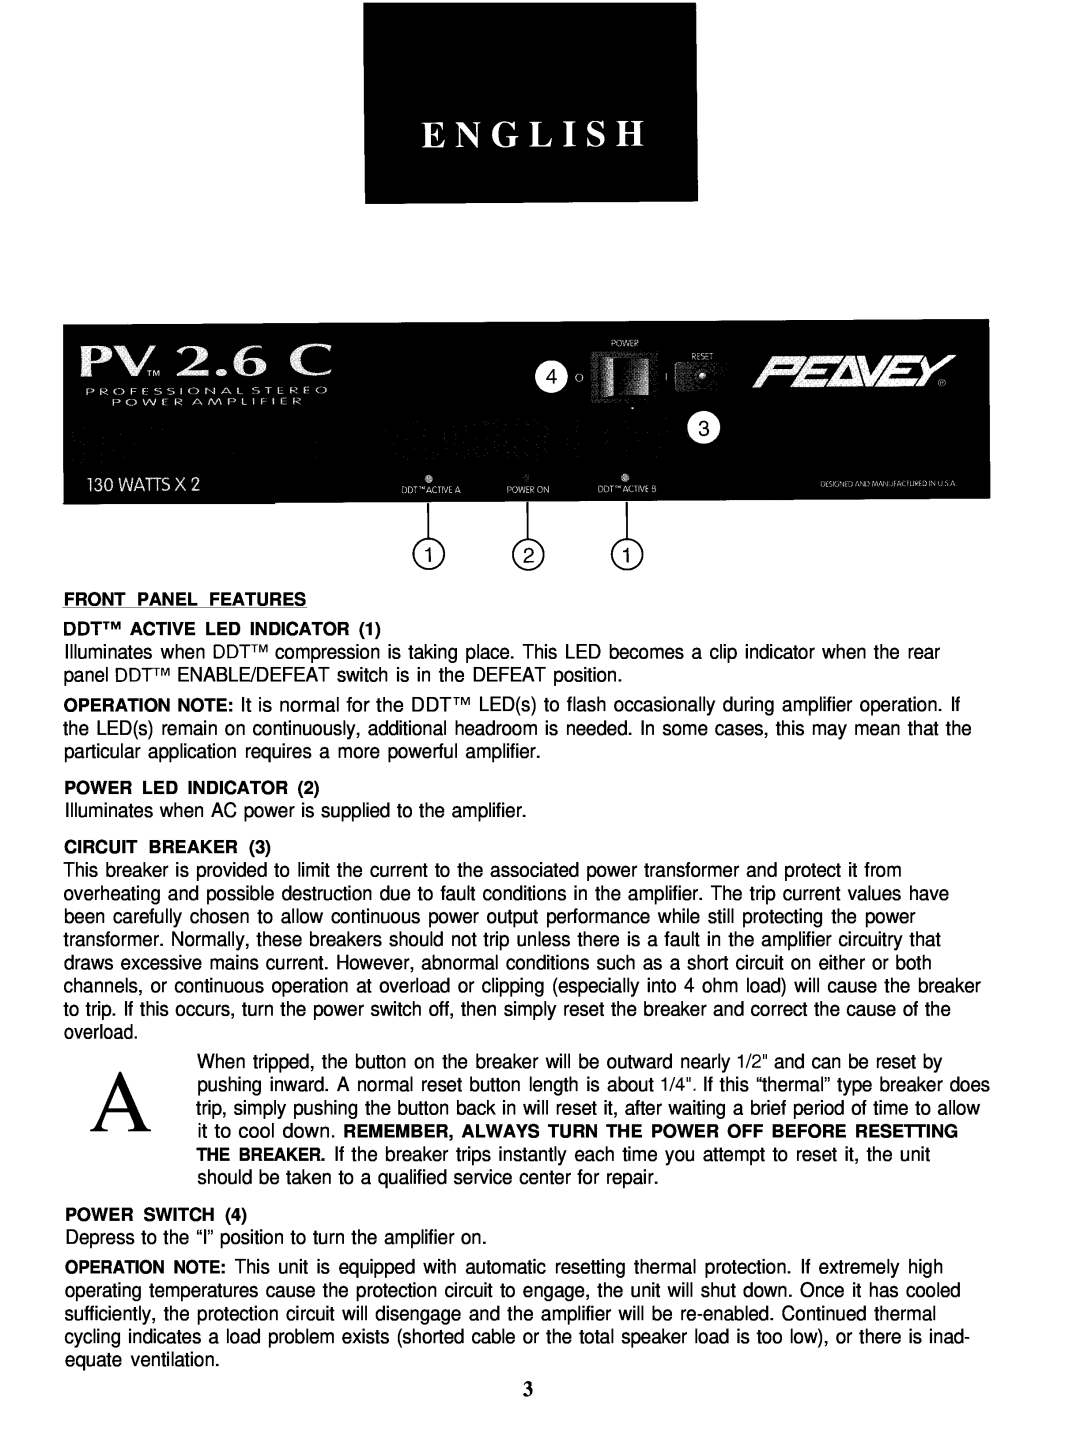 Peavey 2.6 C manual Front Panel Features Ddttm Active Led Indicator, Power Led Indicator, Circuit Breaker, Power Switch 